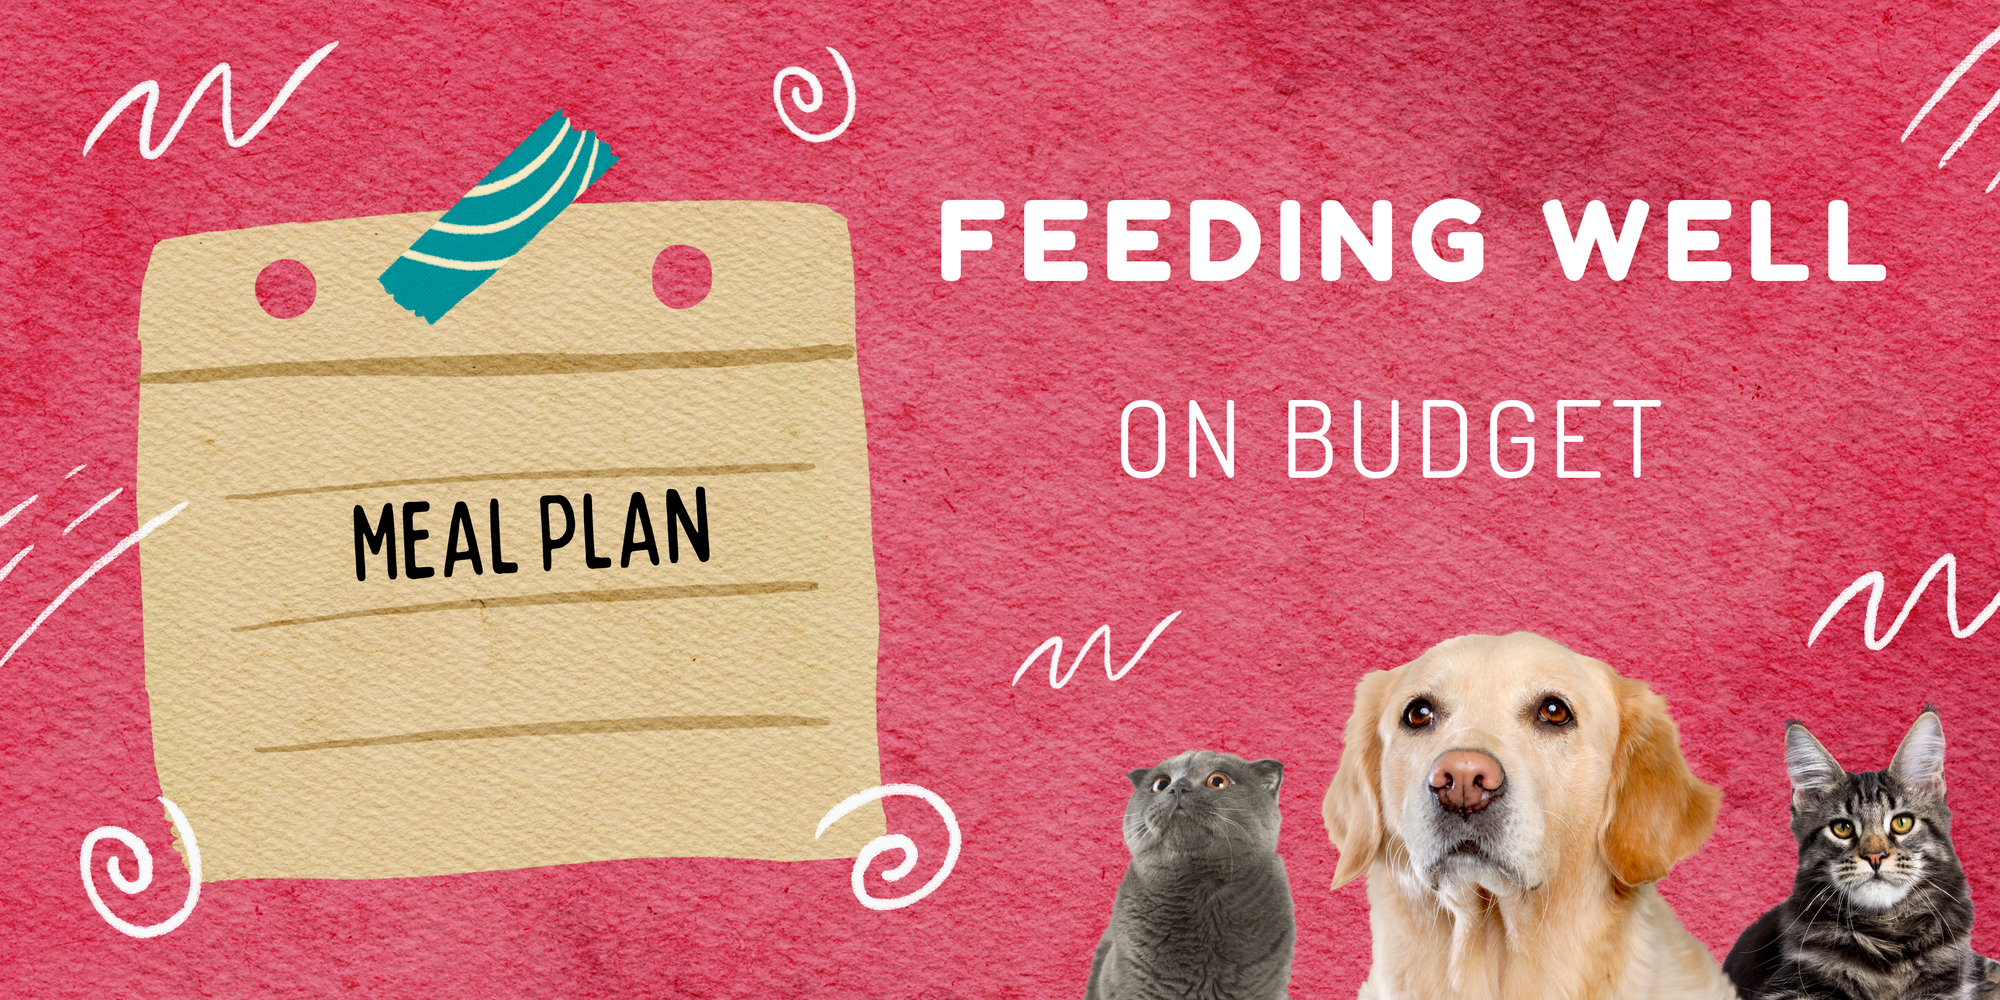 Feeding Well on Budget